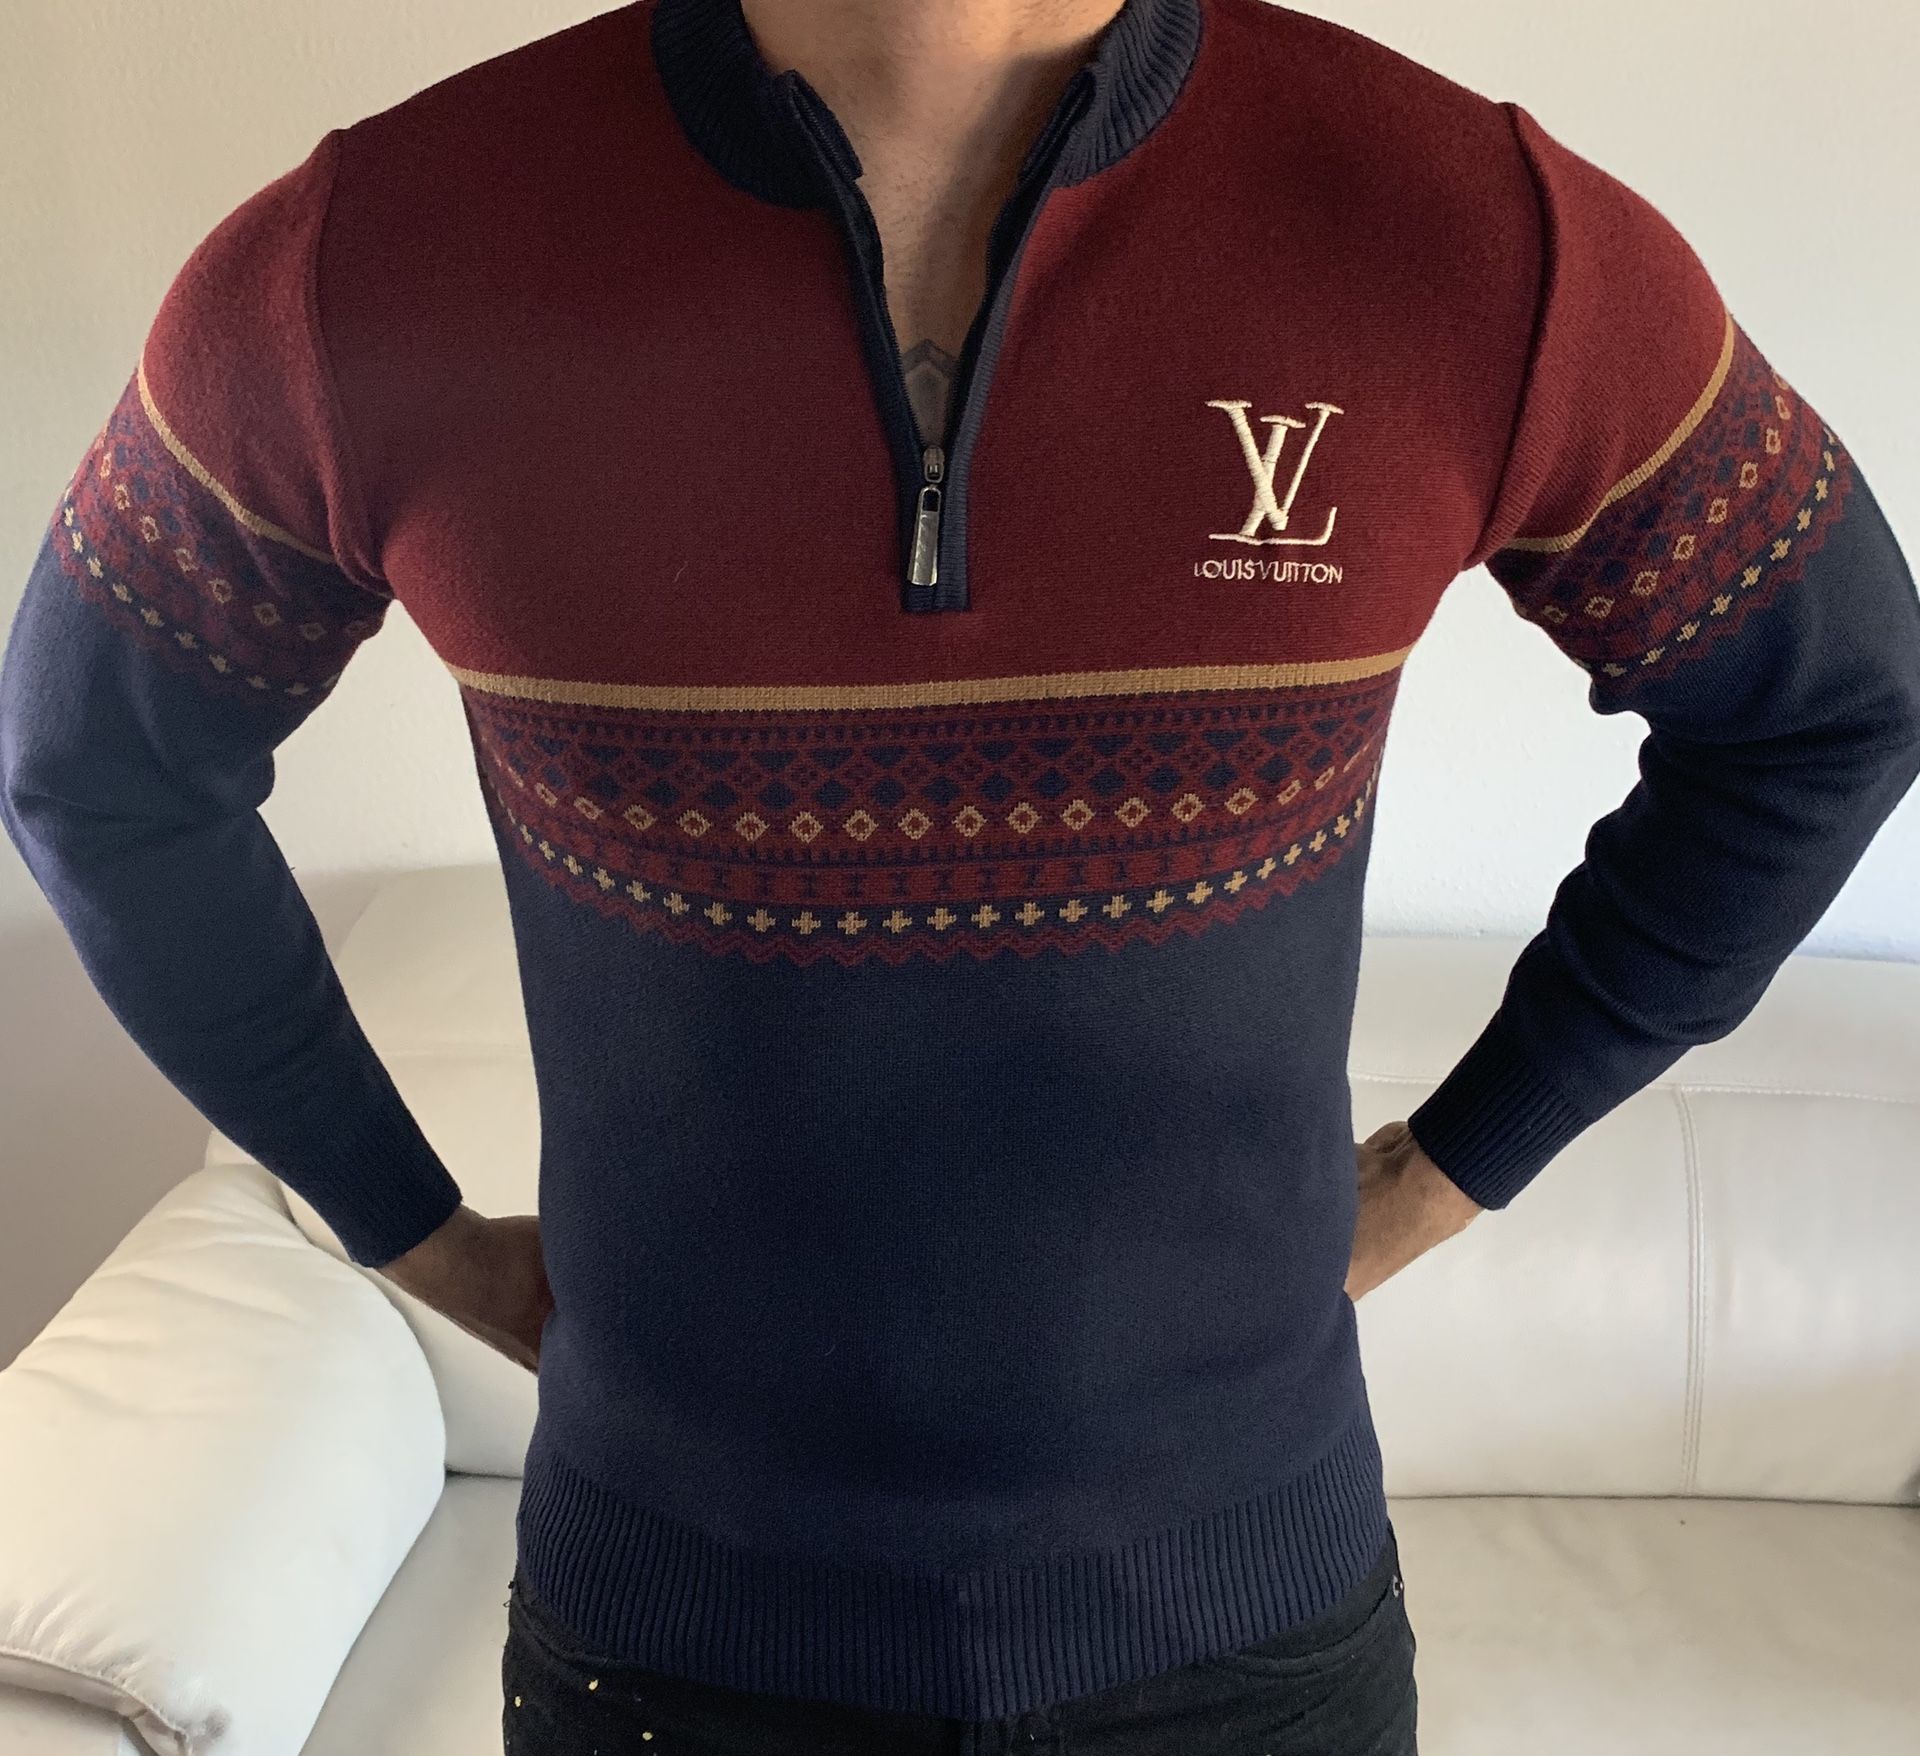 Louis Vuitton sweater